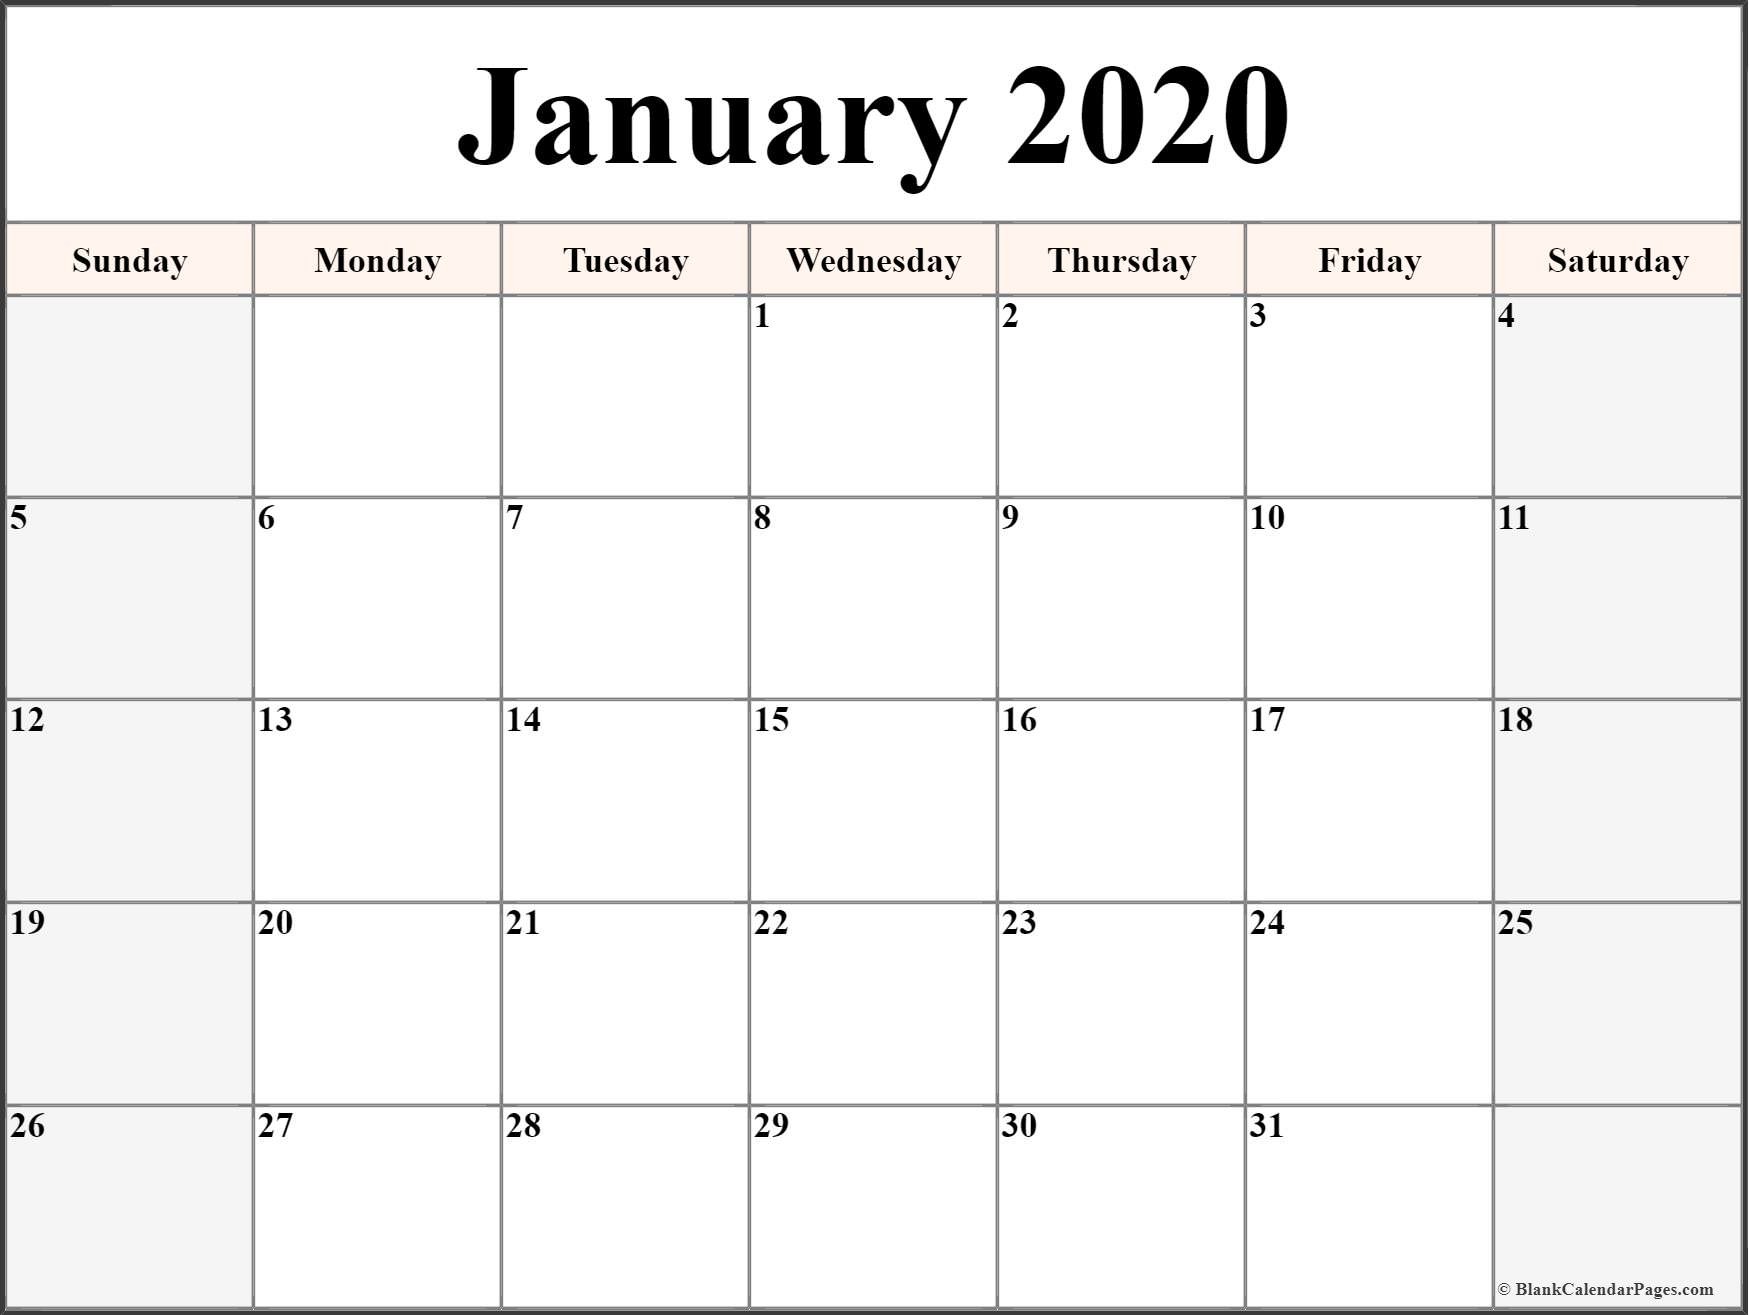 January 2020 blank calendar collection